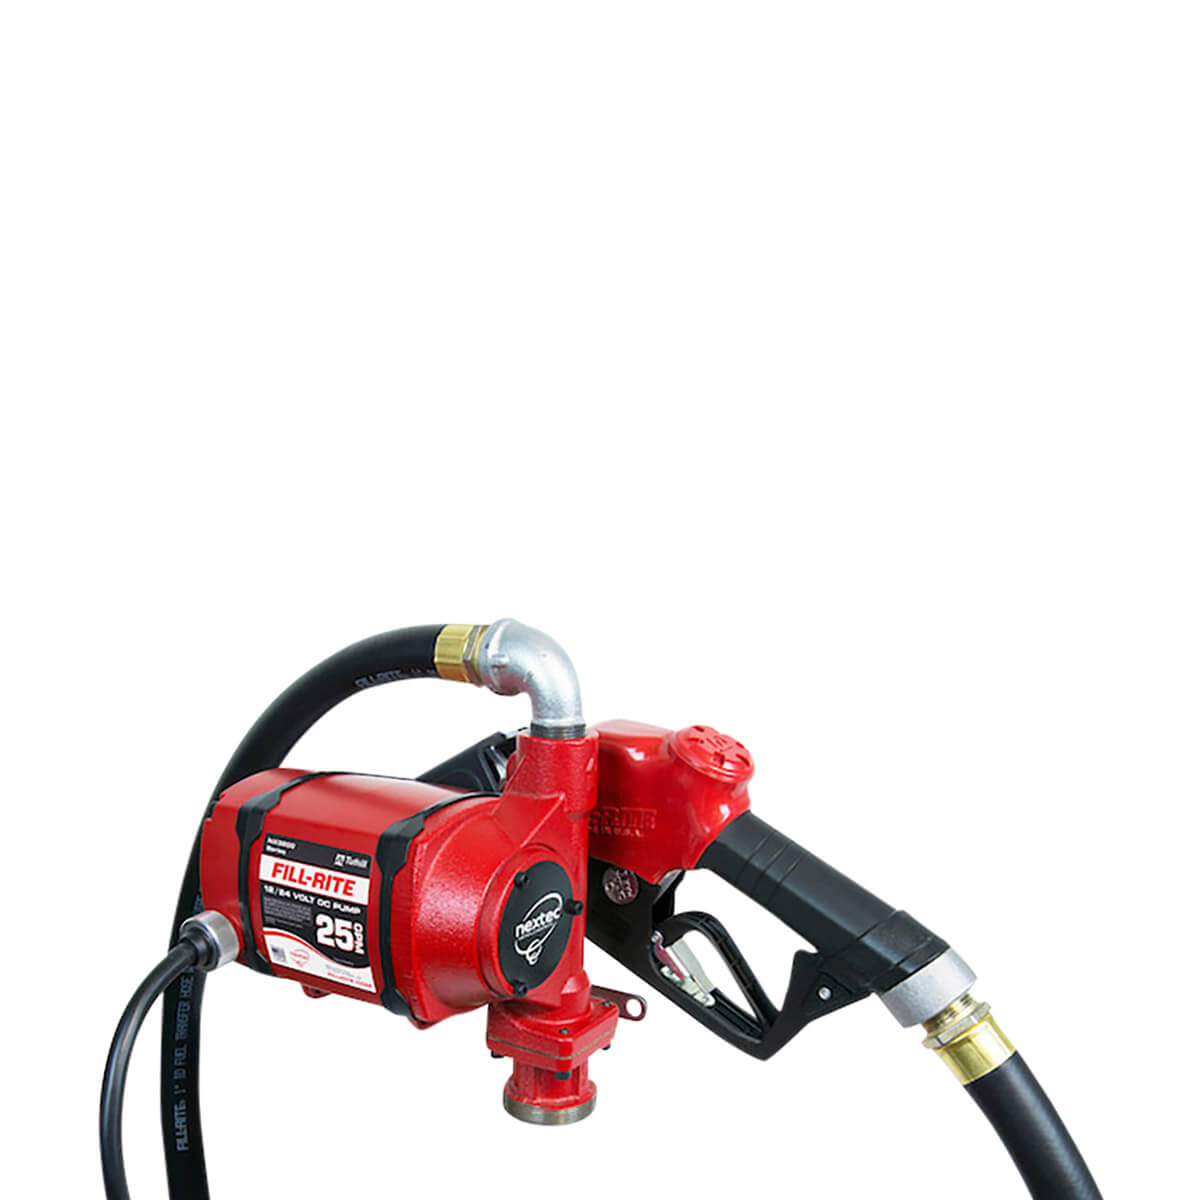 Fill-Rite NX25 Series - Pump, Hose and Nozzle